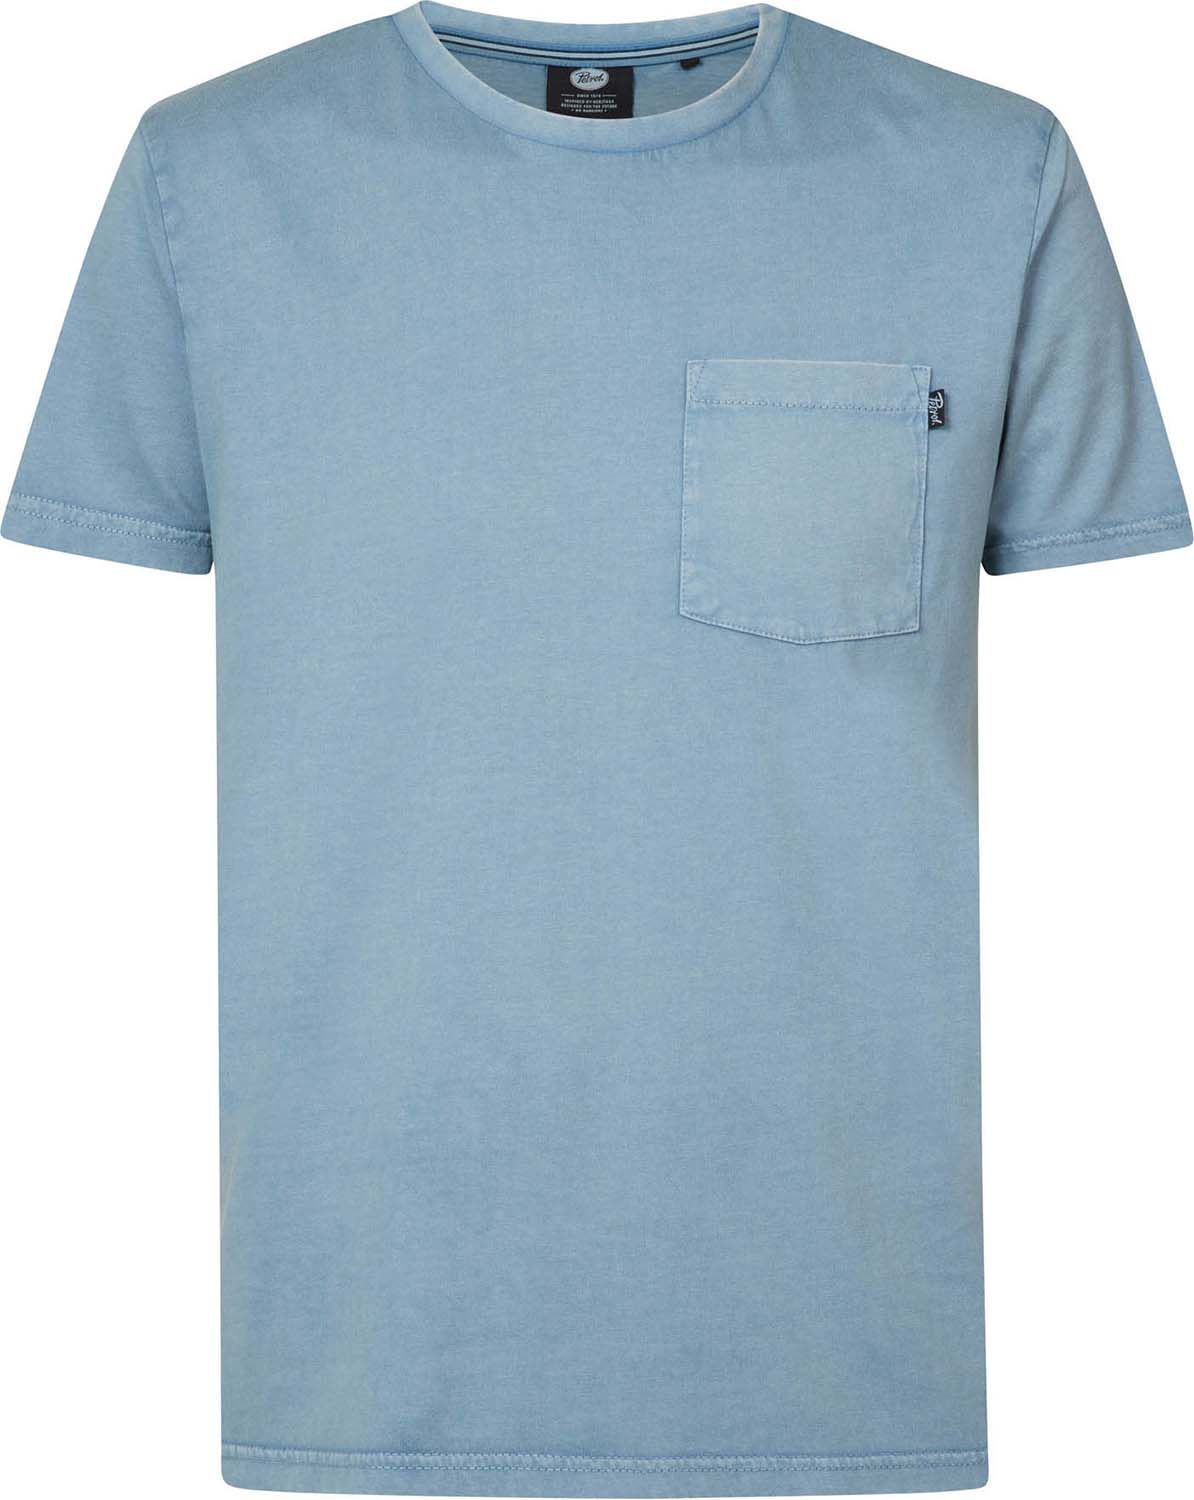 Petrol T-shirt Blauw 